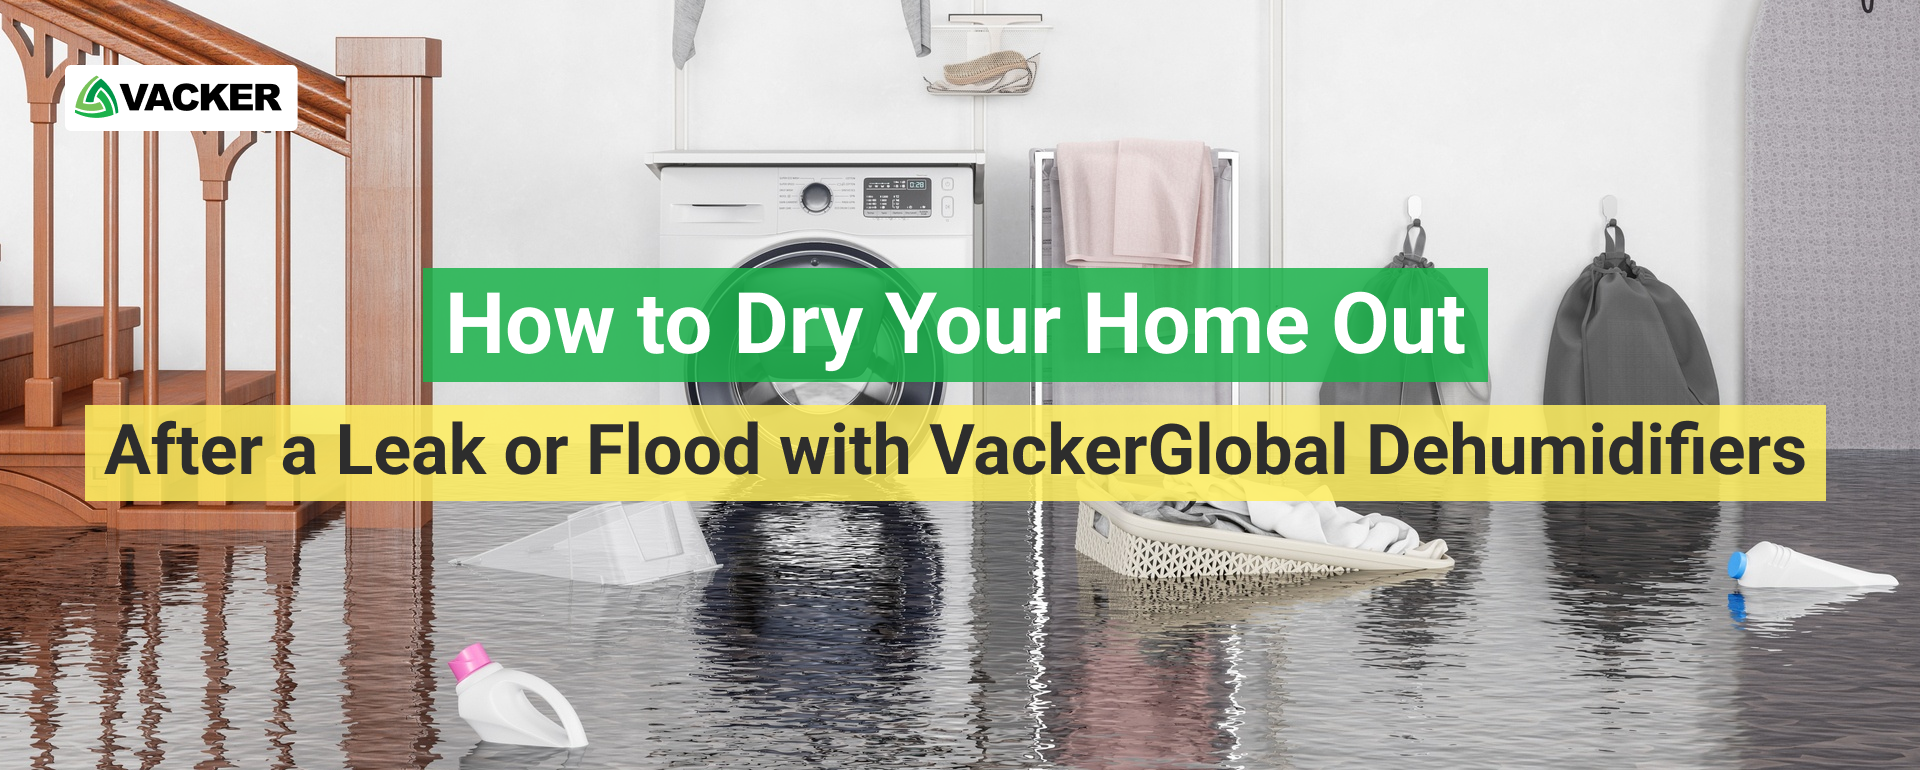 VackerGlobal Dehumidifiers کے ساتھ لیک یا سیلاب کے بعد اپنے گھر کو کیسے خشک کریں۔